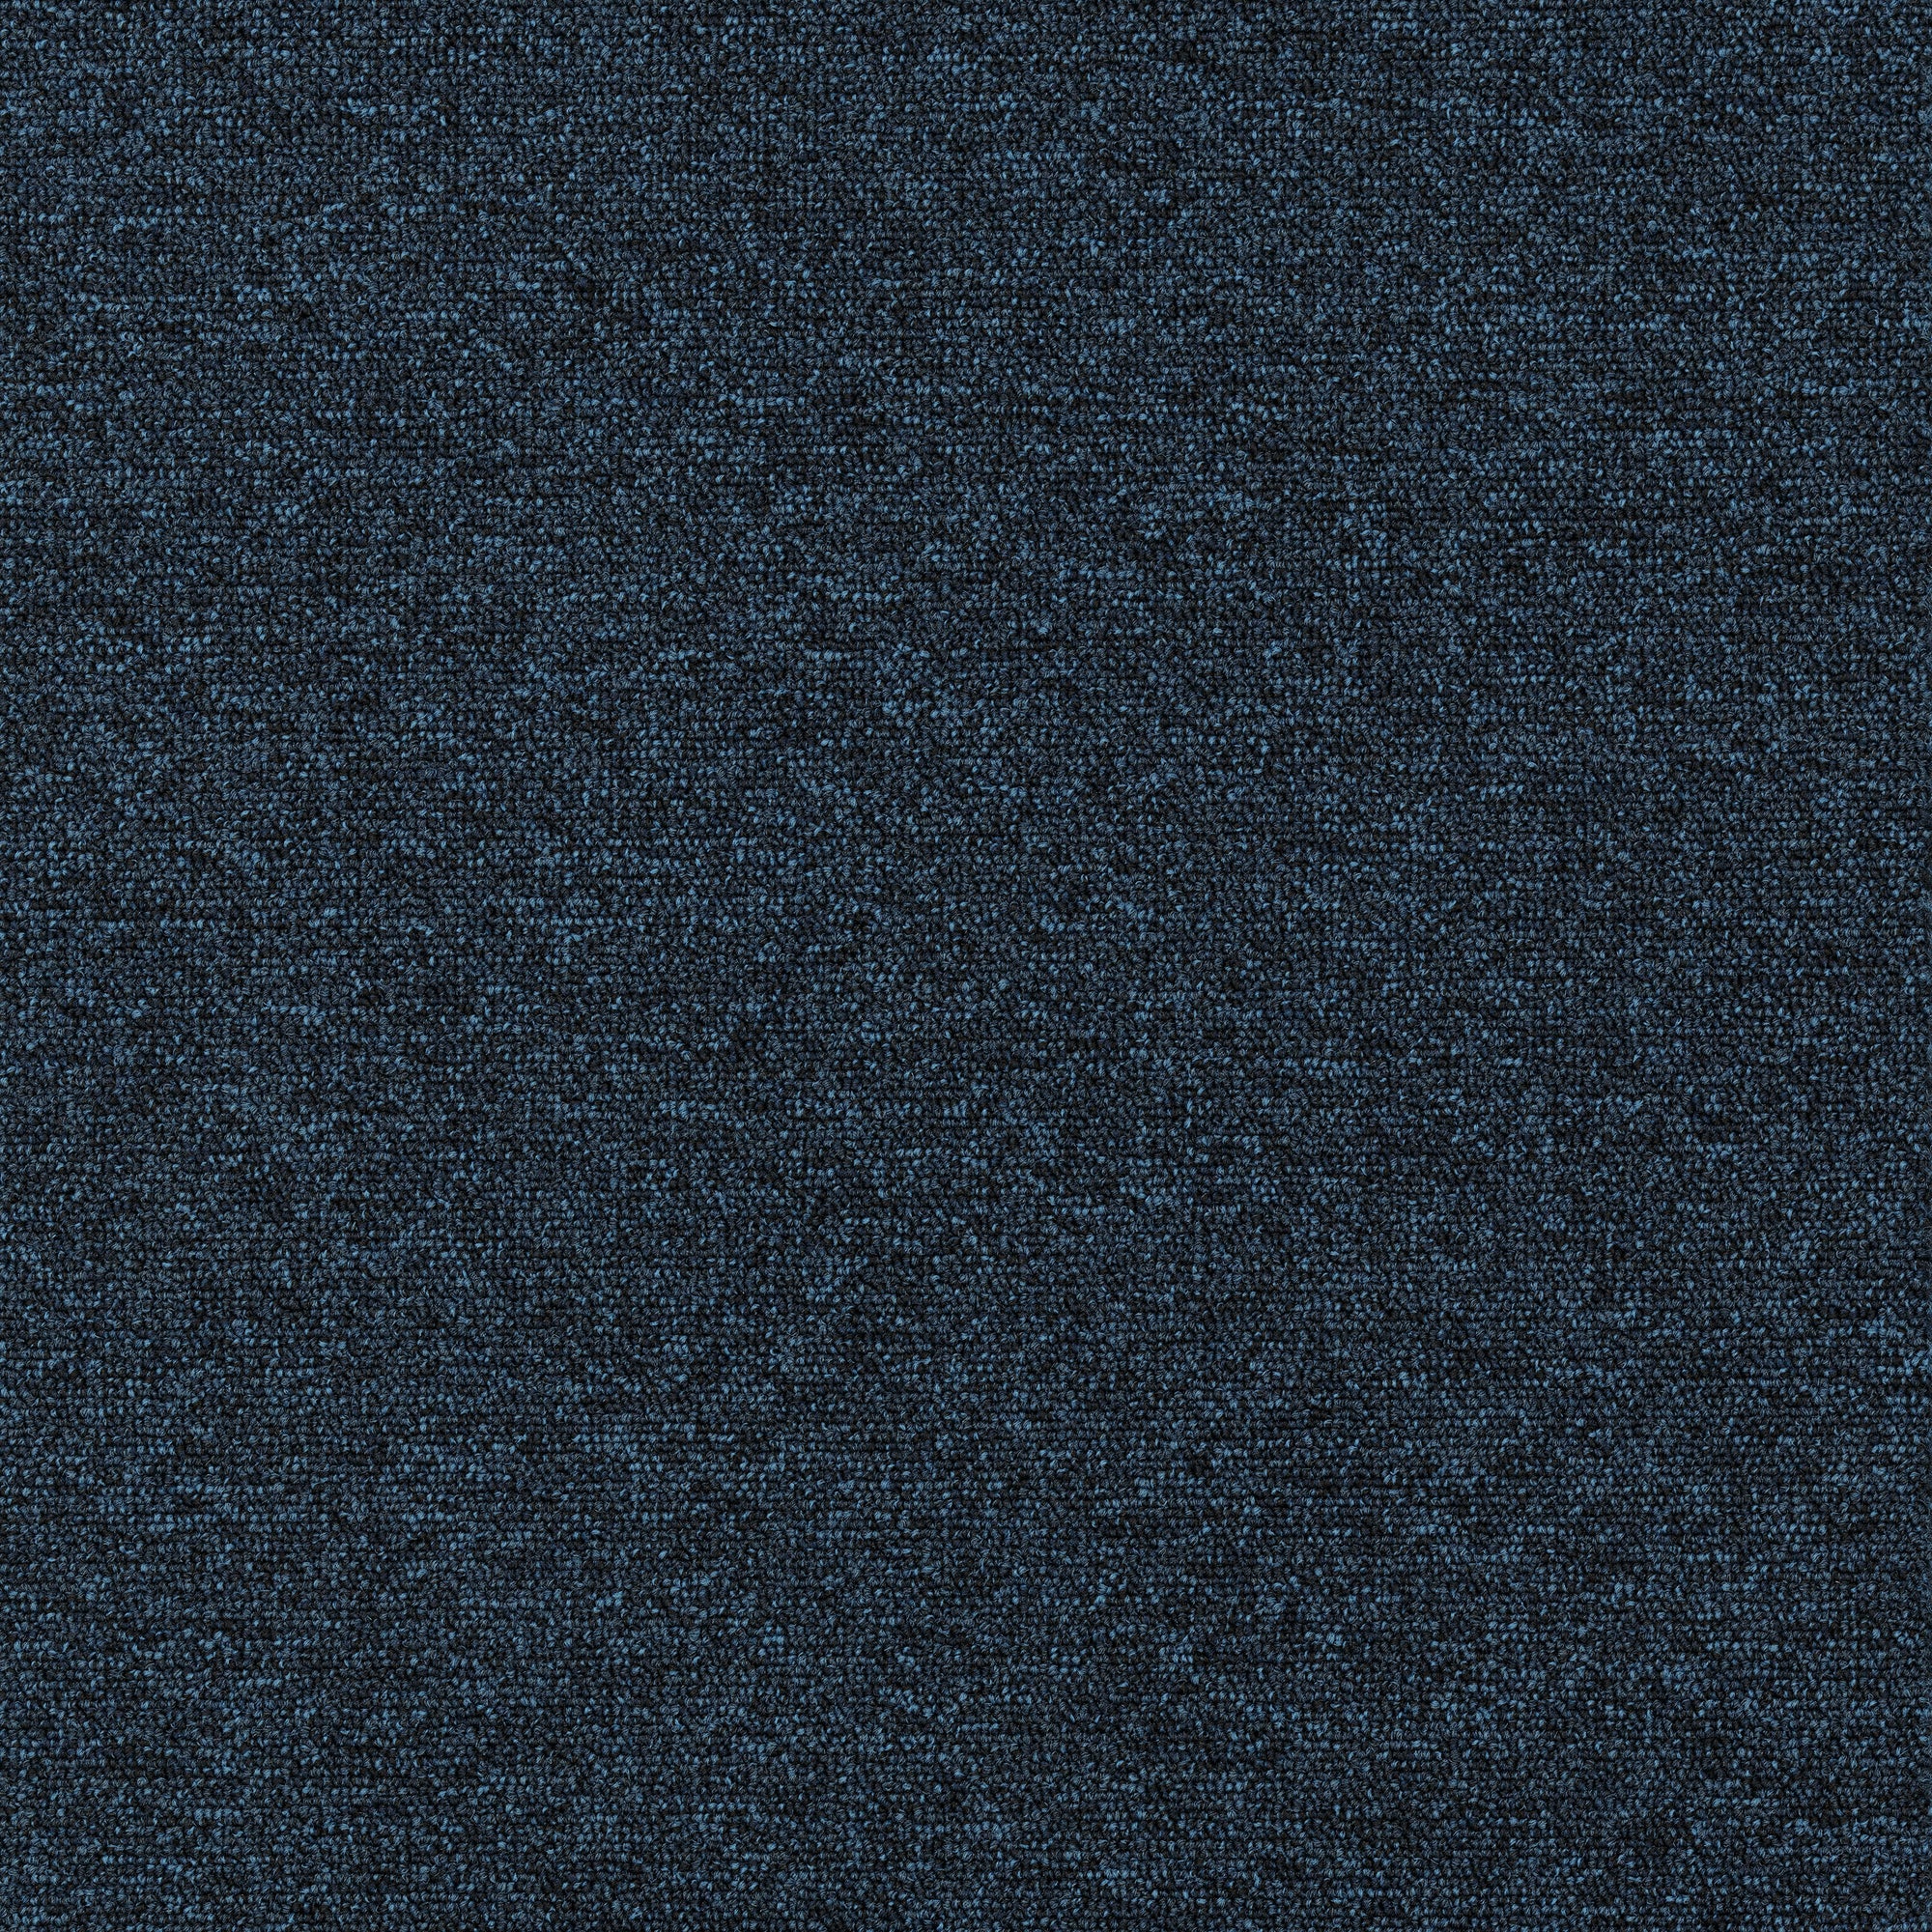 Plusfloor New Viilea Storm Blue carpet tiles for offices 100% Nylon